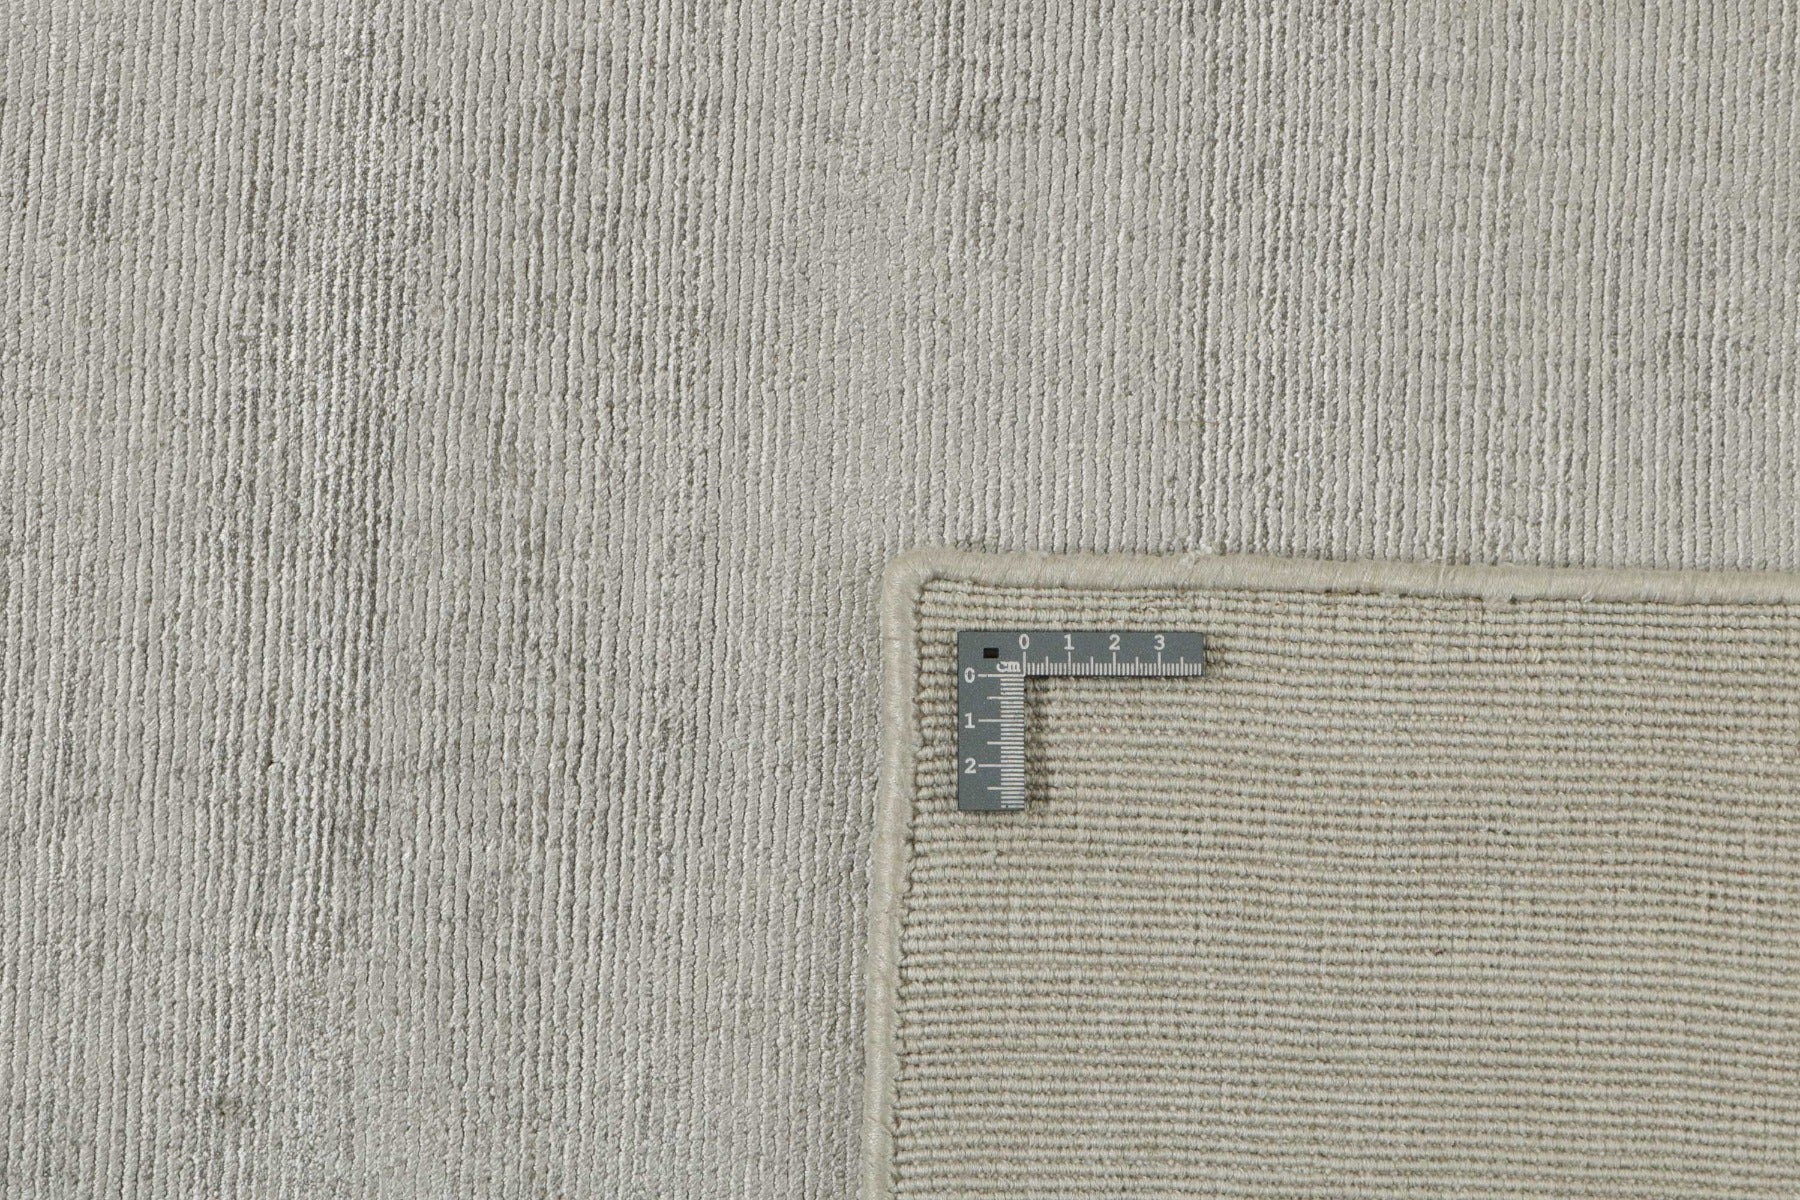 plain grey rug
